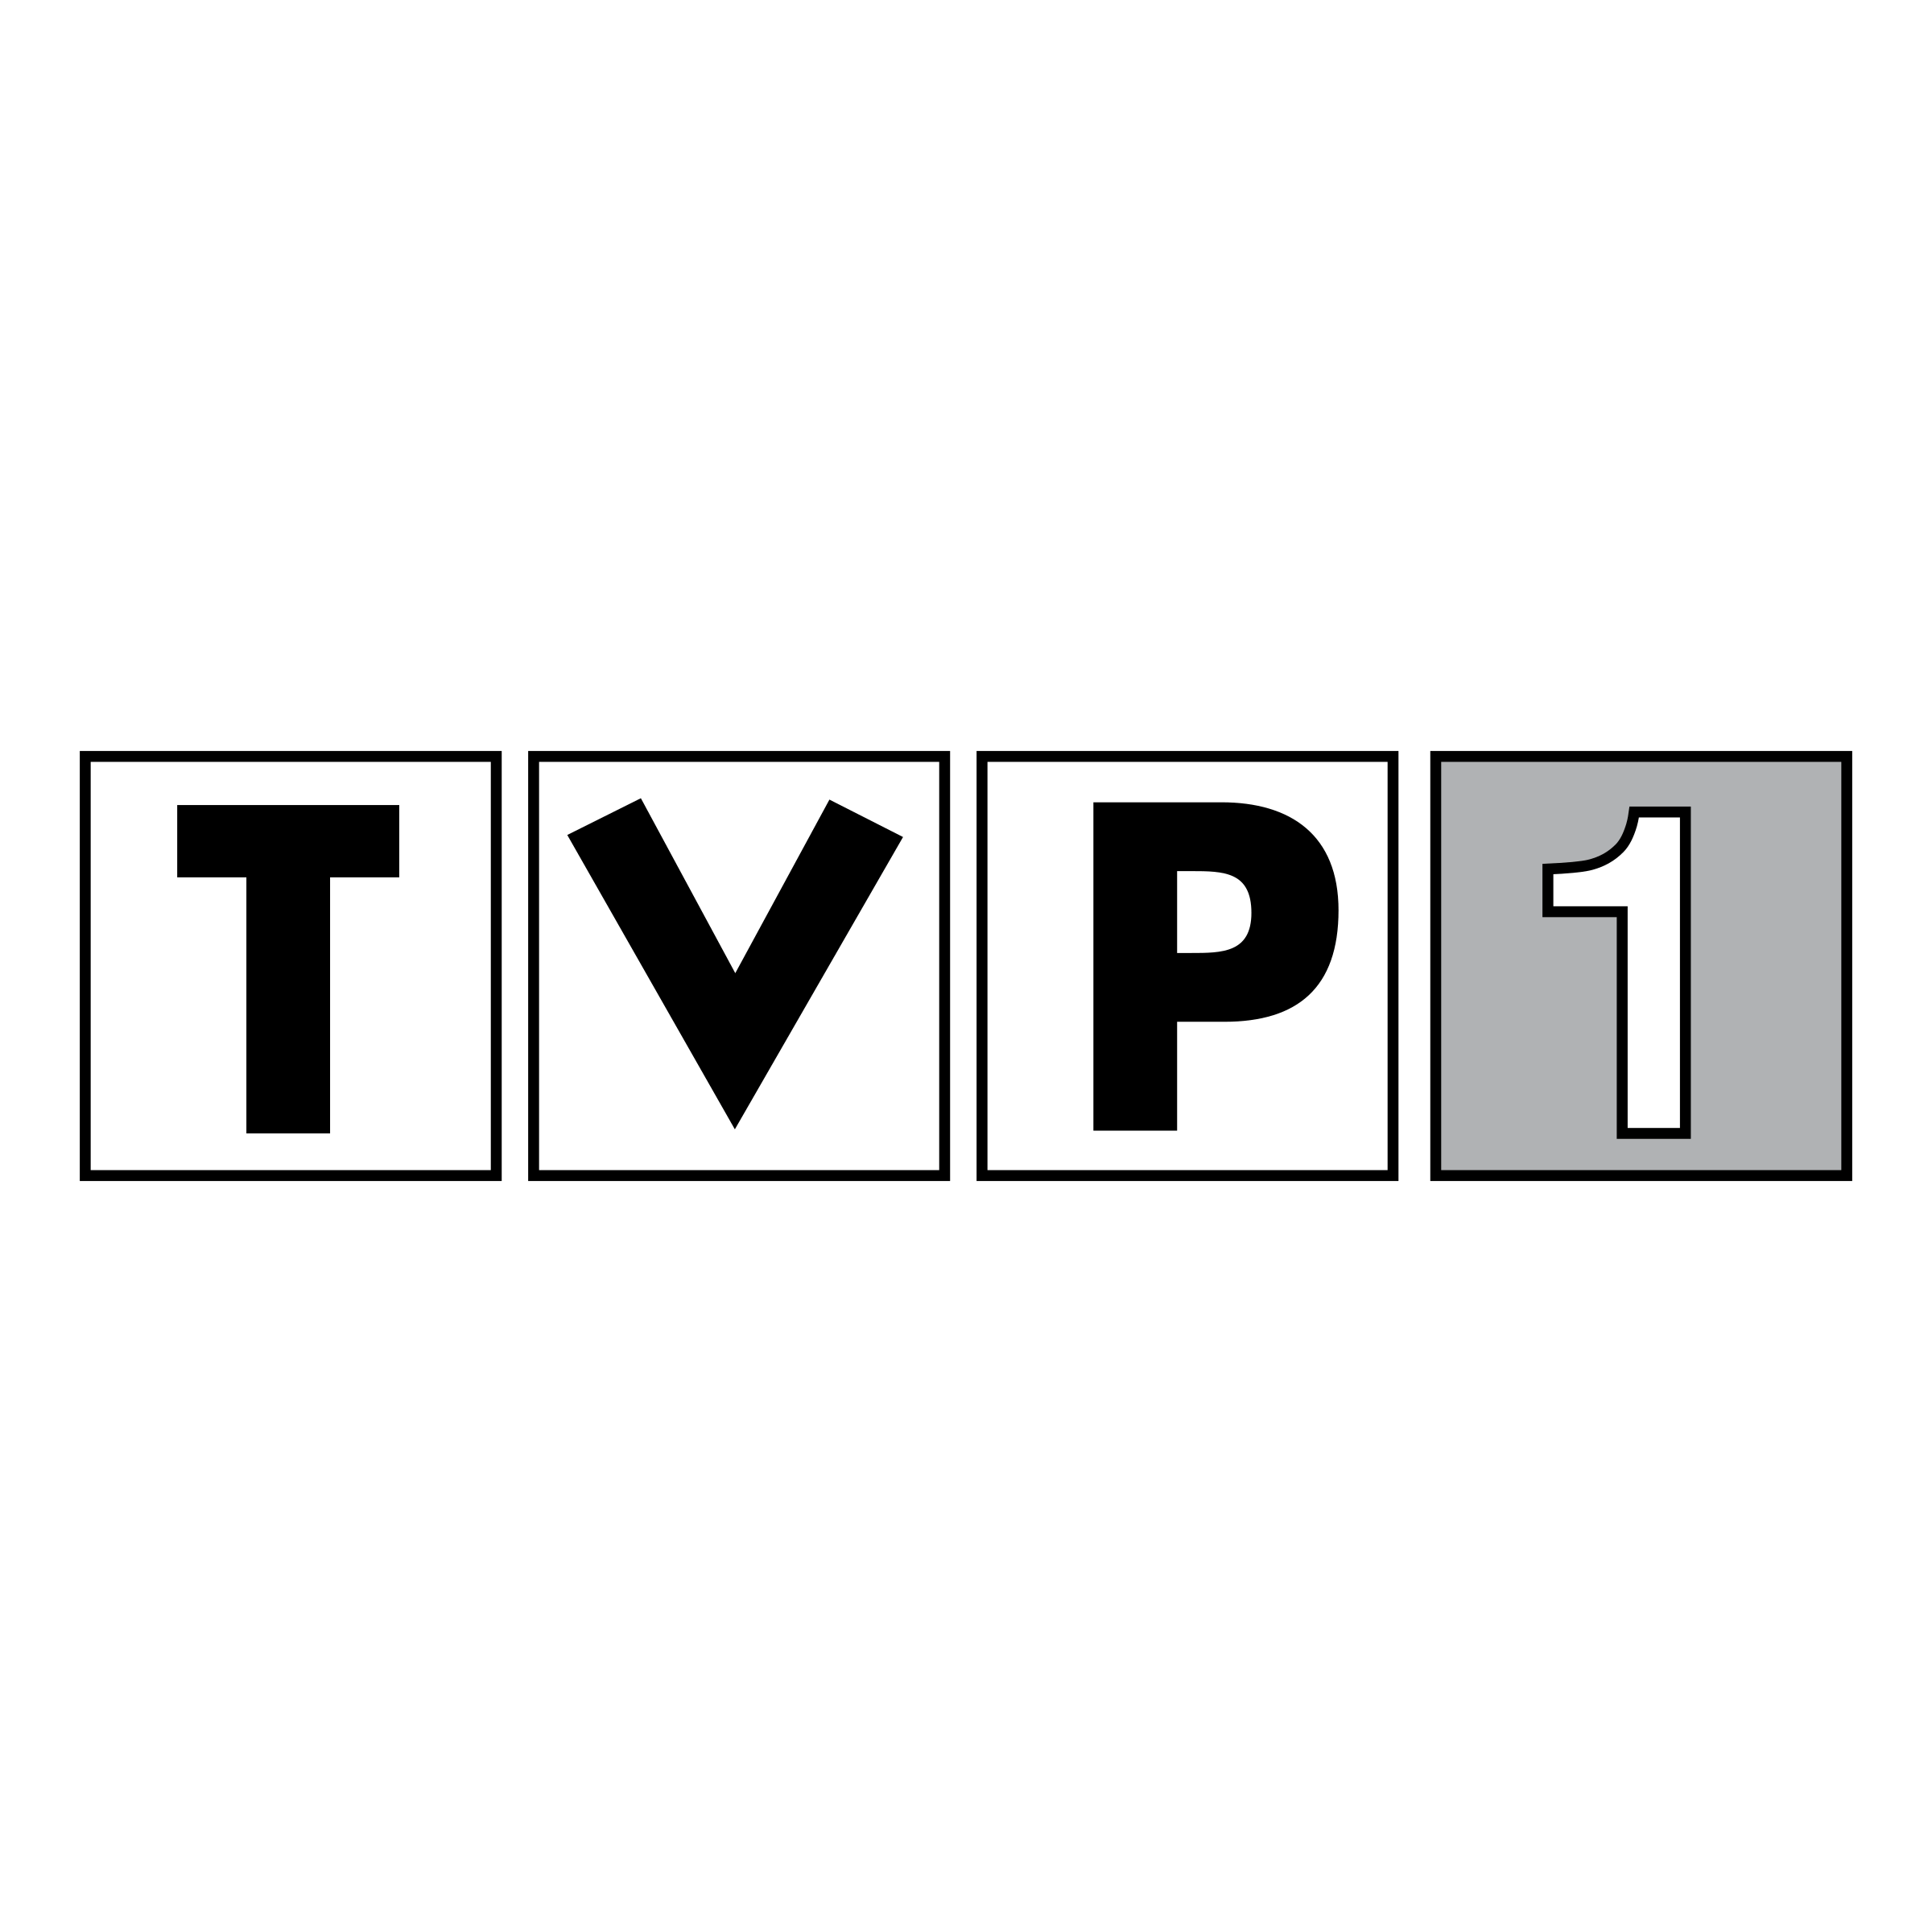 TVP Logo - TVP 1 Logo PNG Transparent & SVG Vector - Freebie Supply